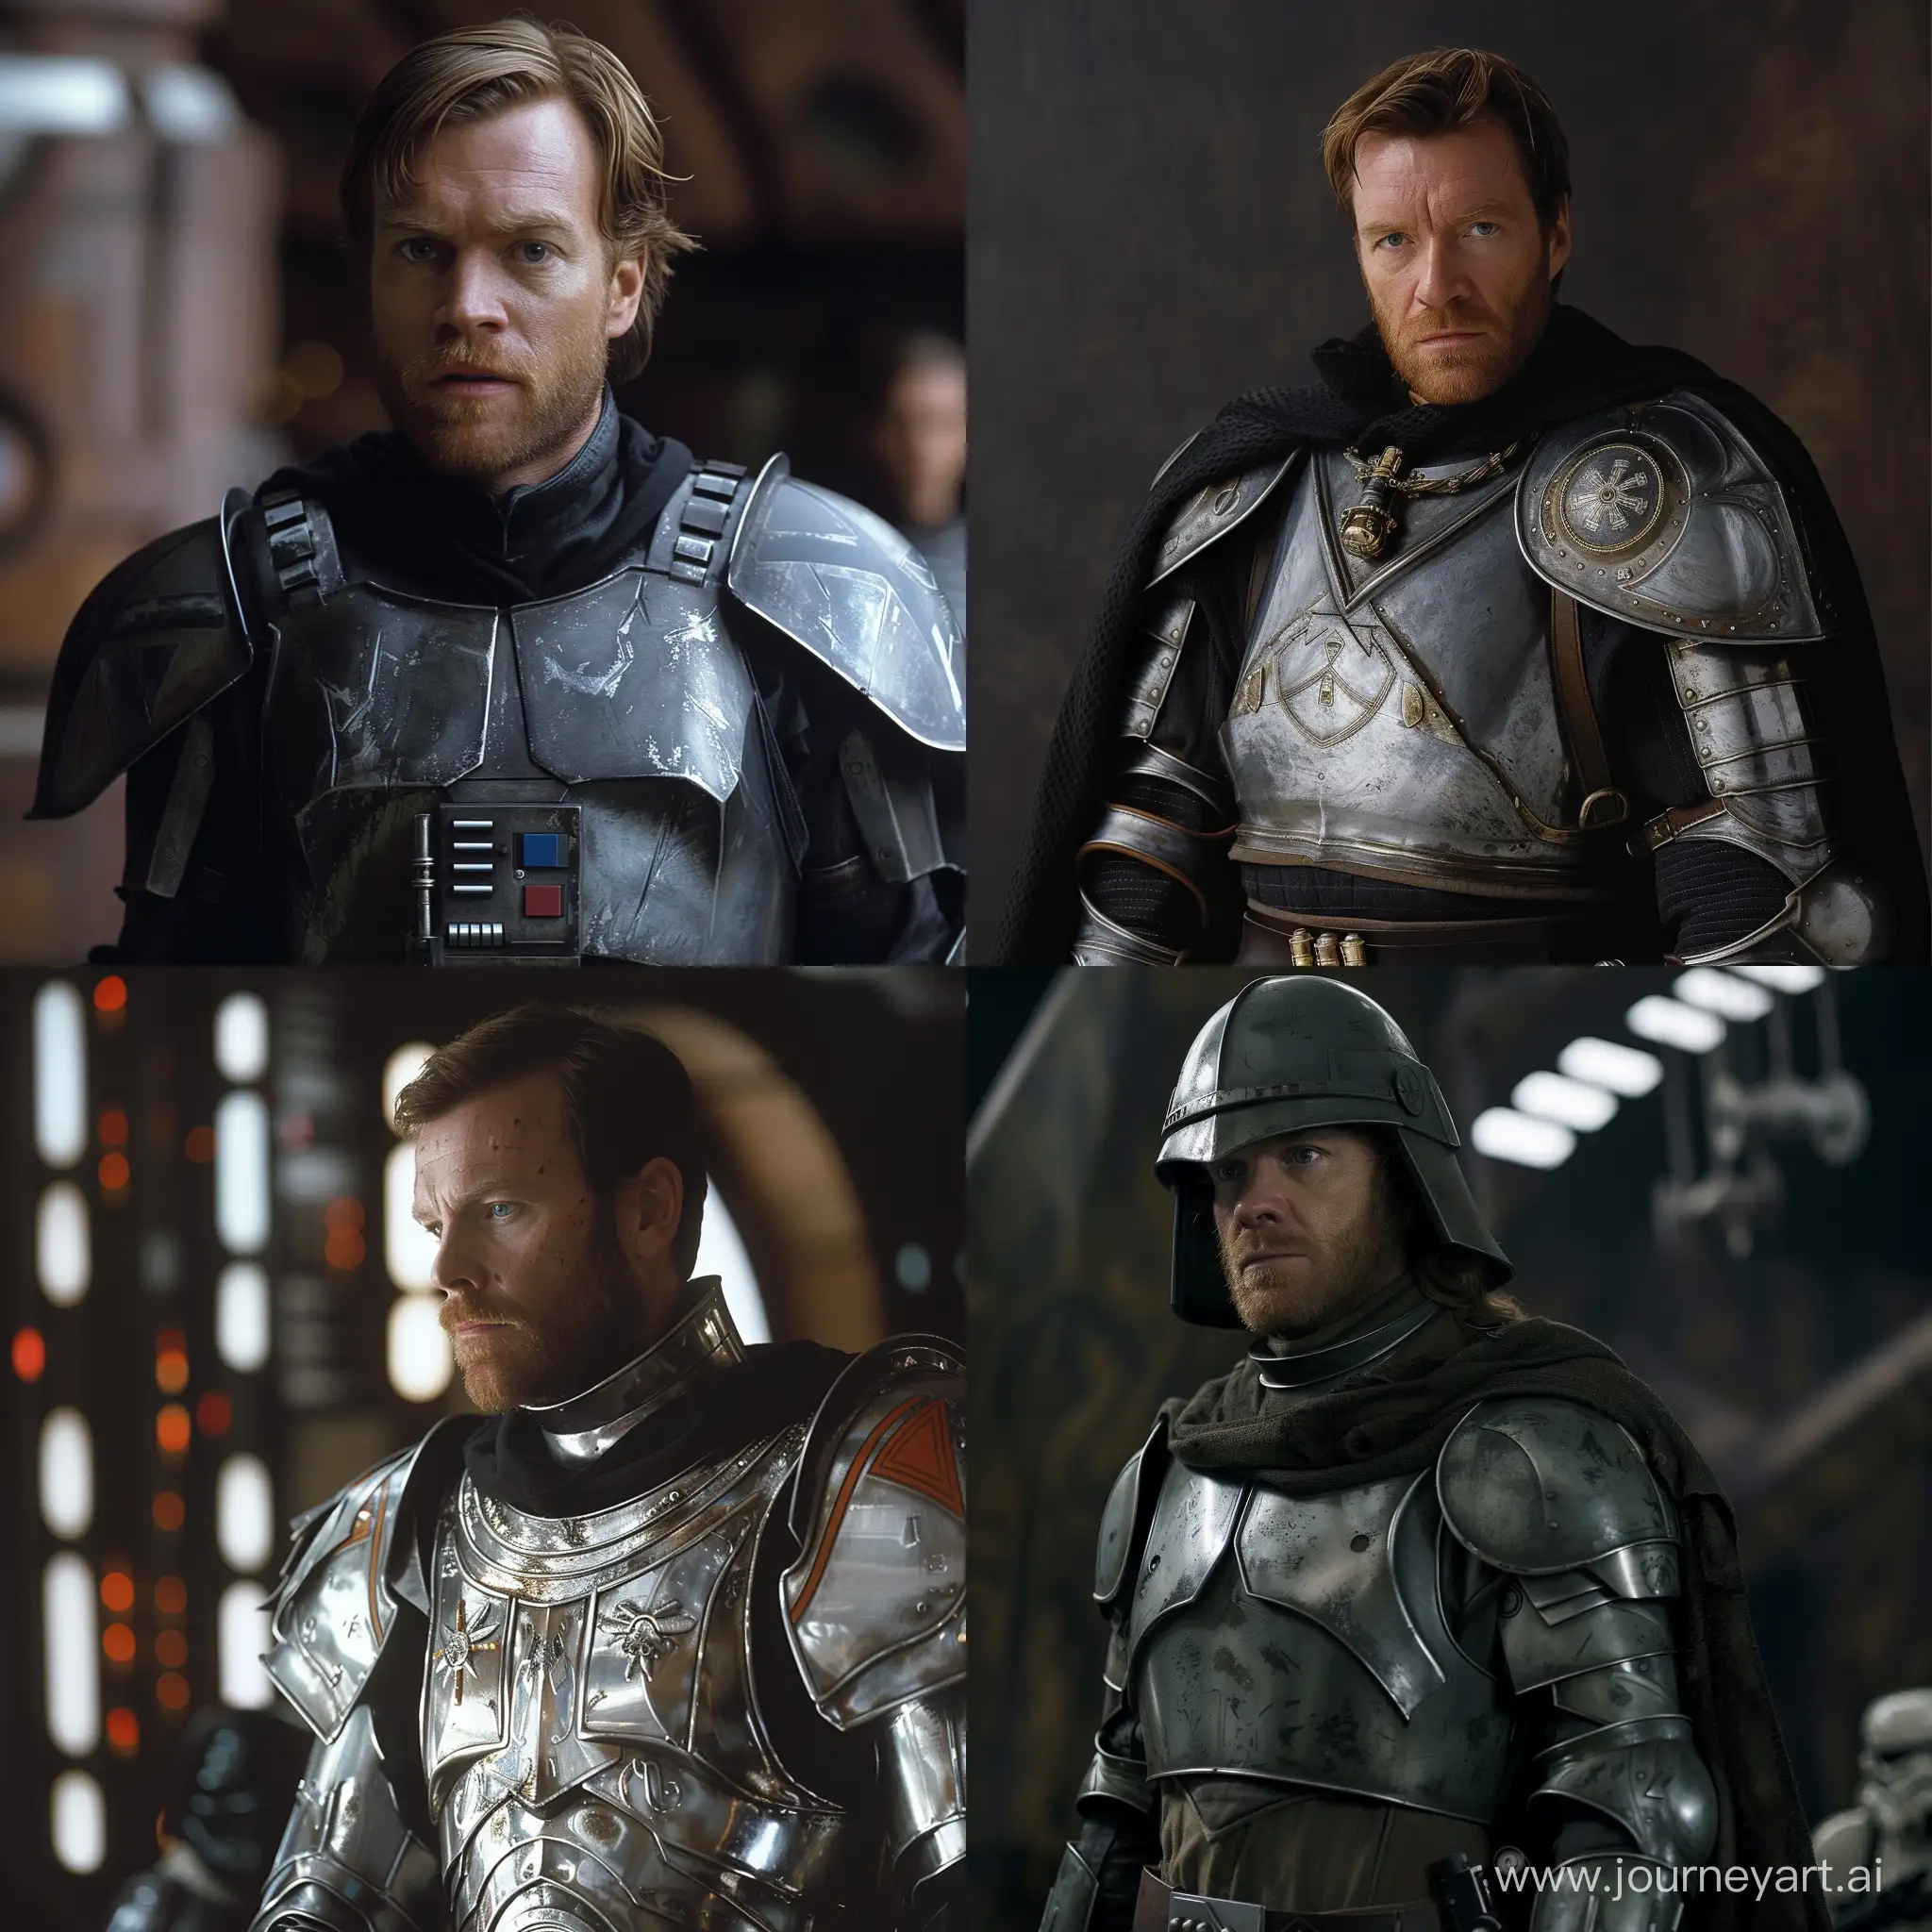 Ewan-McGregor-as-Star-Wars-Soldier-in-Armor